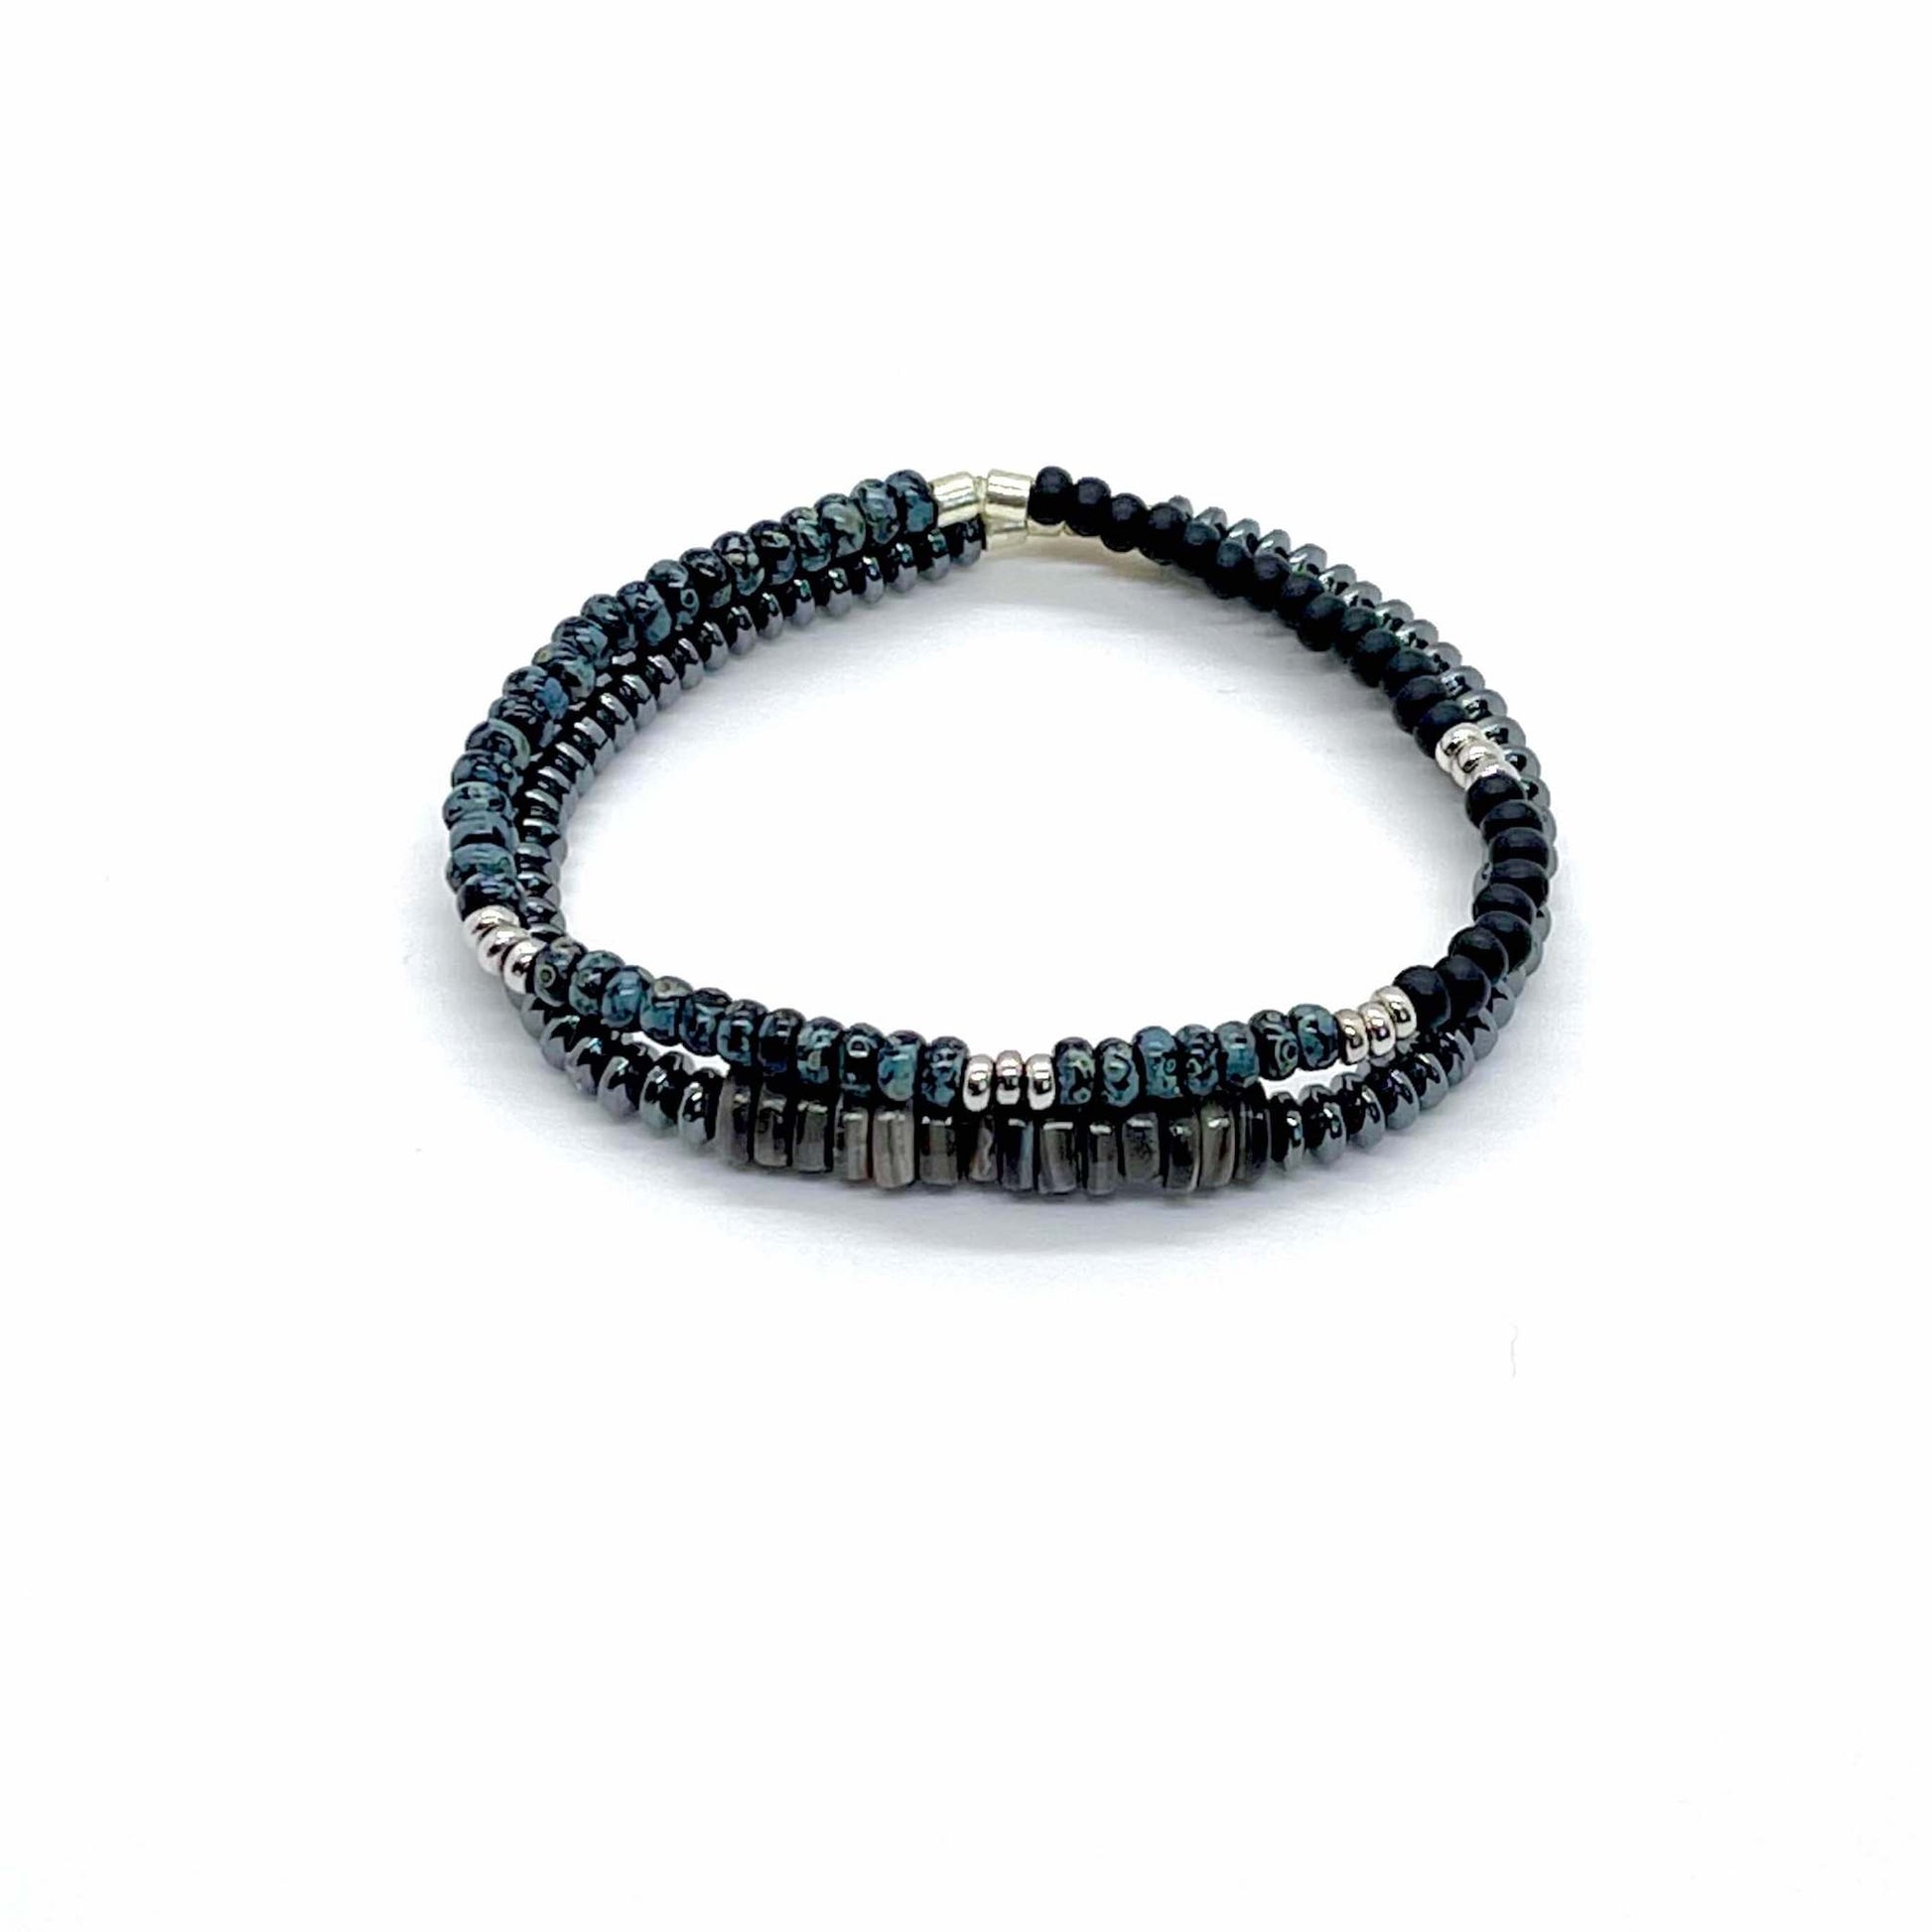 Men’s bracelet set with a hematite bracelet with shells, and a men's black beaded bracelet with silver and blue marble beads.